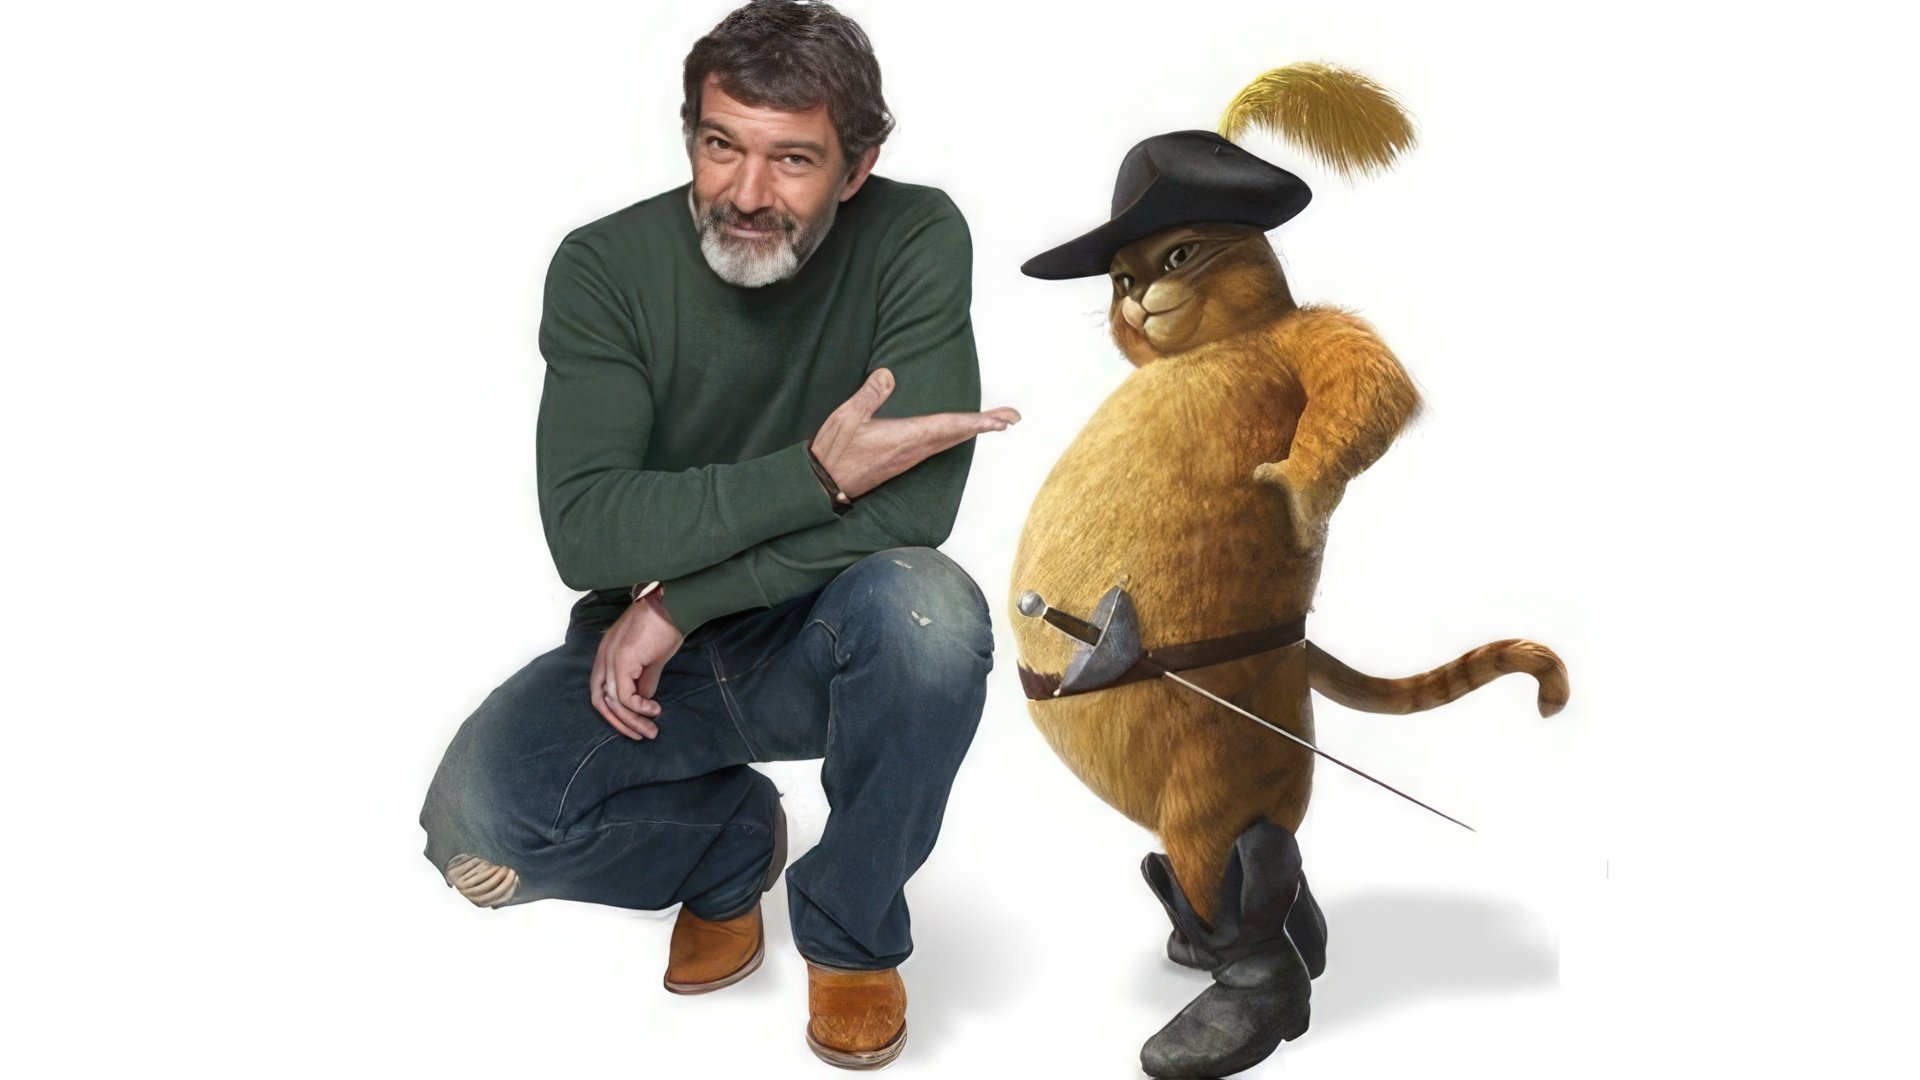 Antonio Banderas voiced a cat in a cartoon about Shrek